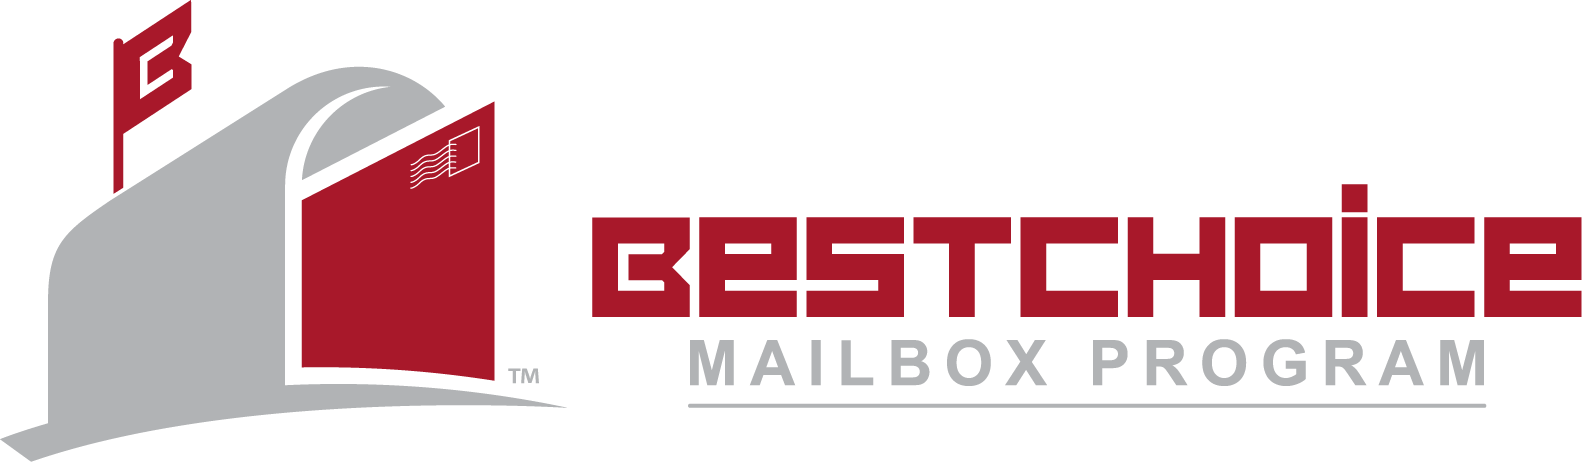 Best Choice Mailbox Program Logo